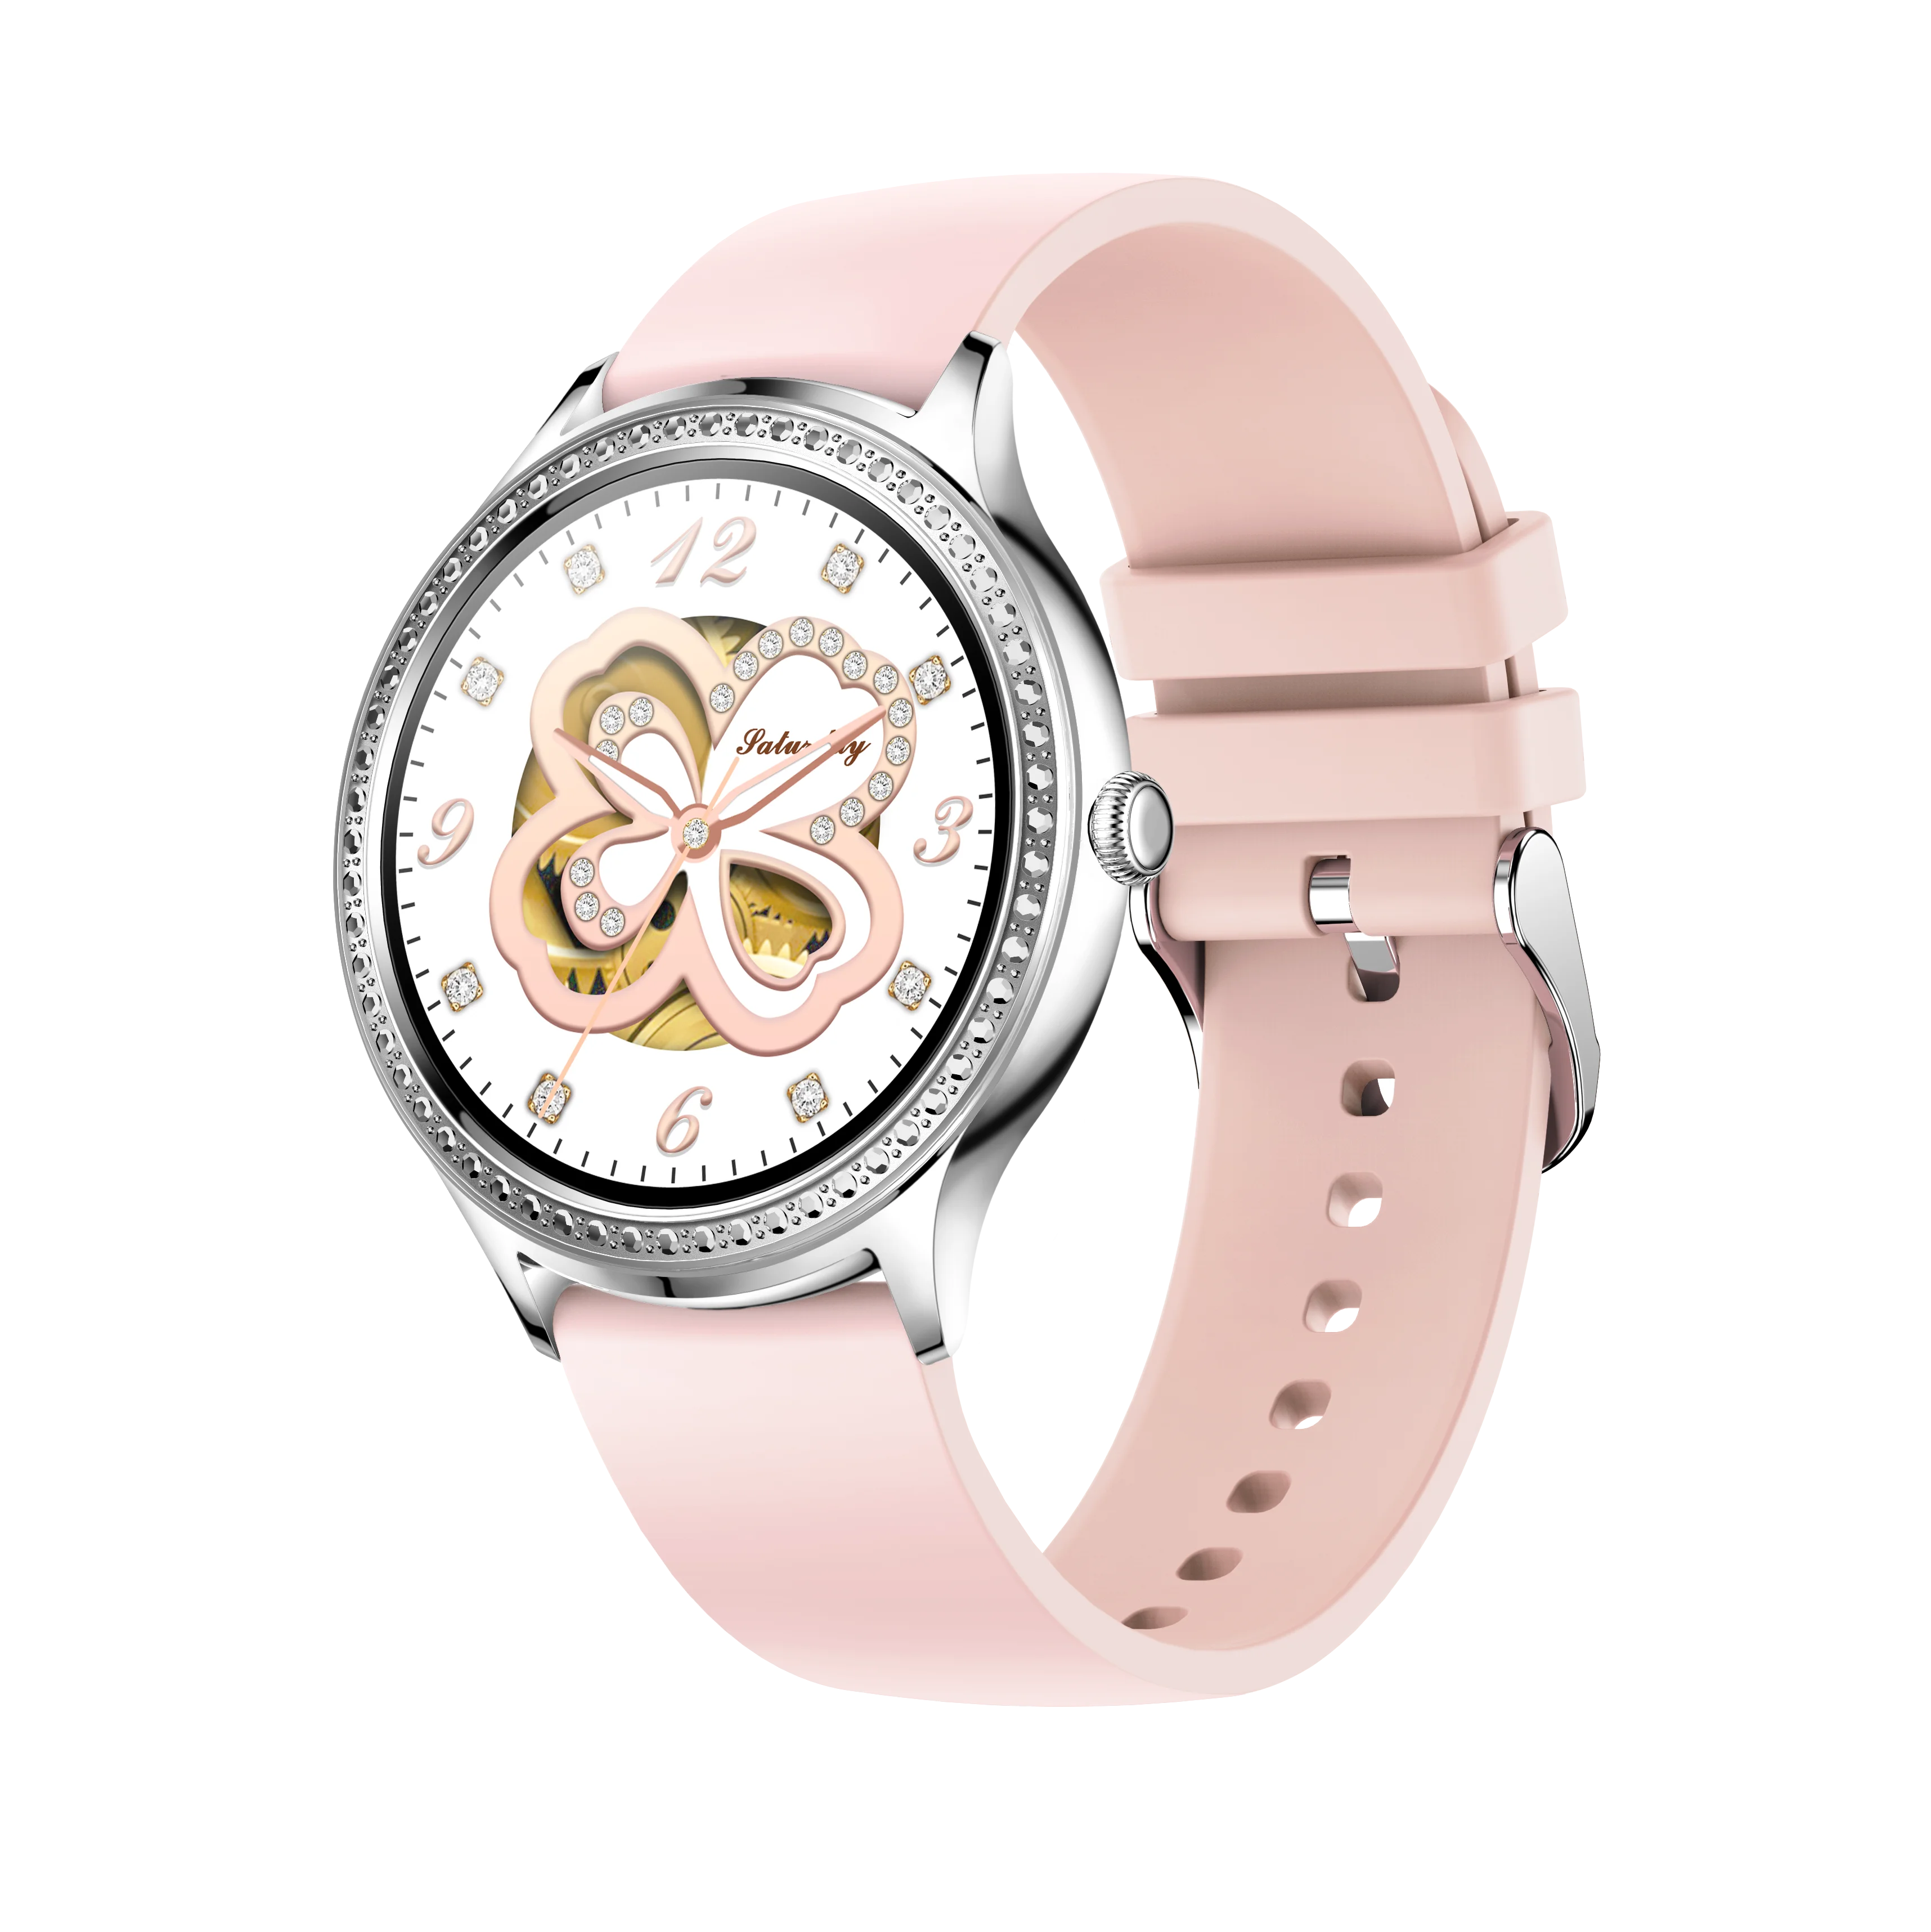 

Fashion Smart Watch for Women Lady 1.32 inch Round Screen IP68 Waterproof Heart Rate AK35 Smartwatch Menstrual Period Reminder